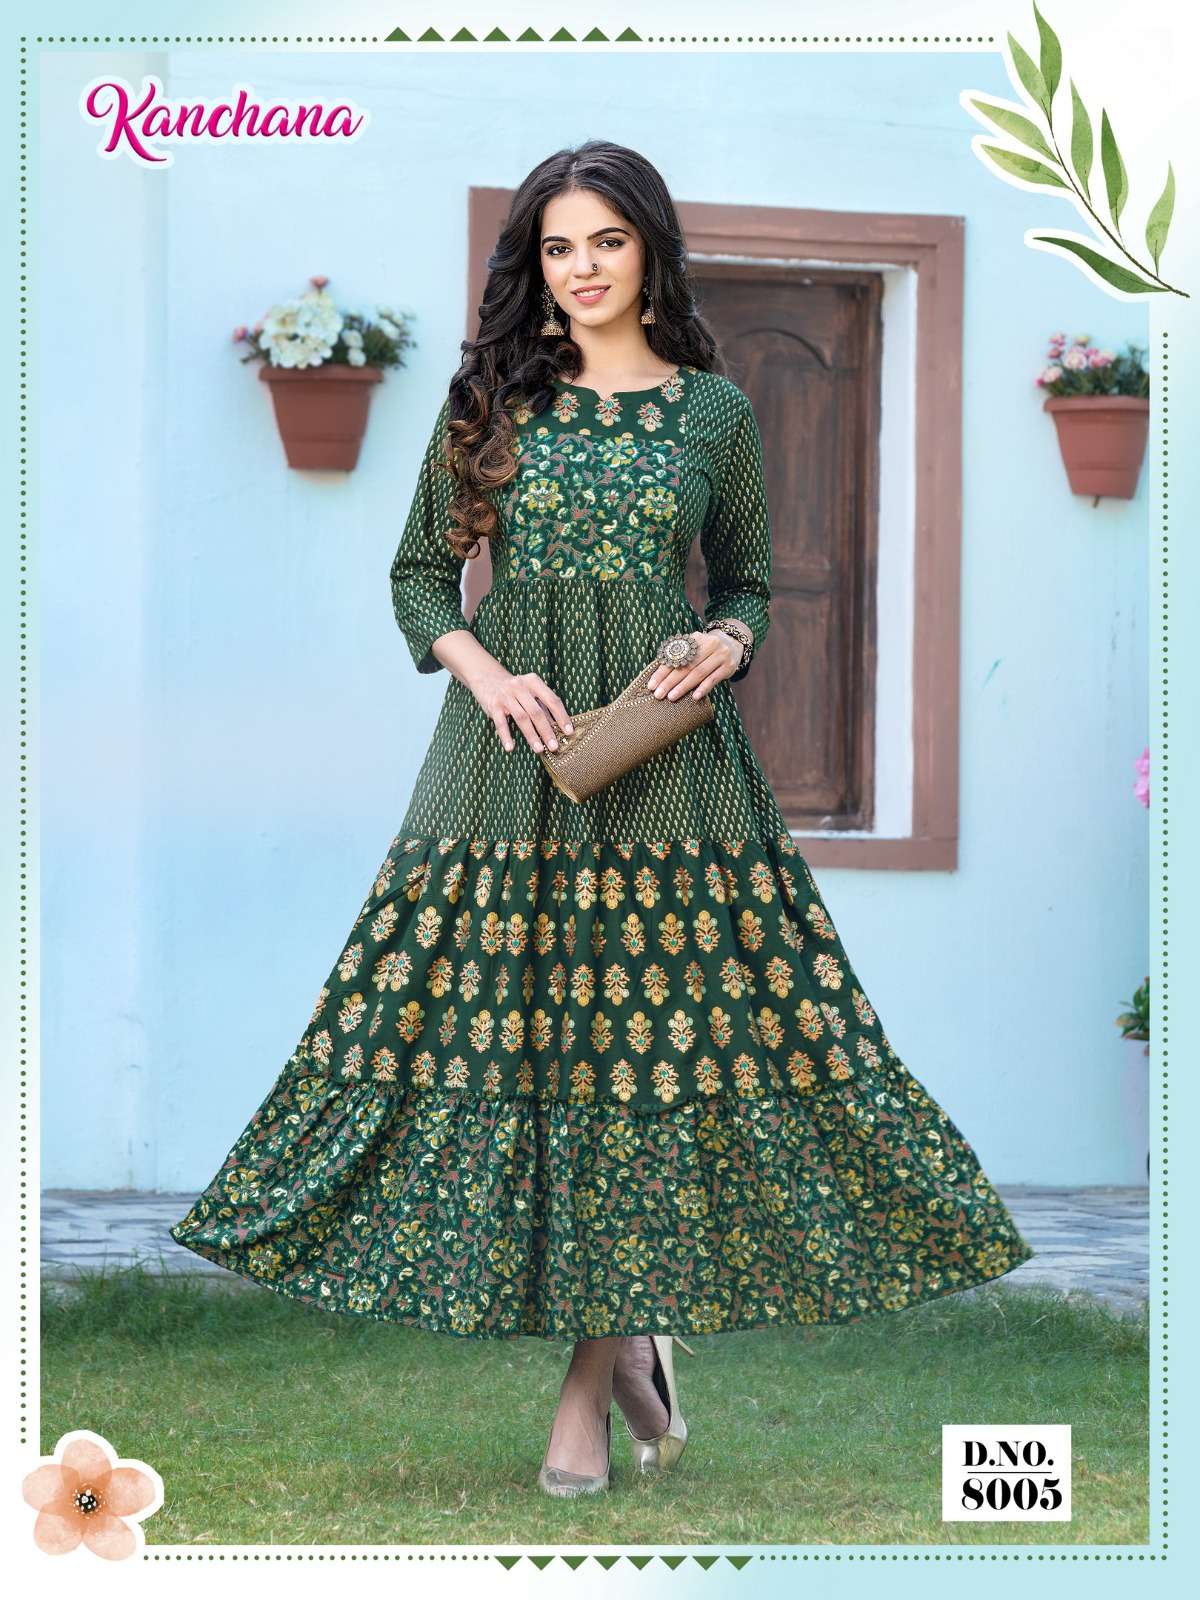 banwery by kanchana 101-108 series reyon flair gown style long kurti wholesale dealer surat 